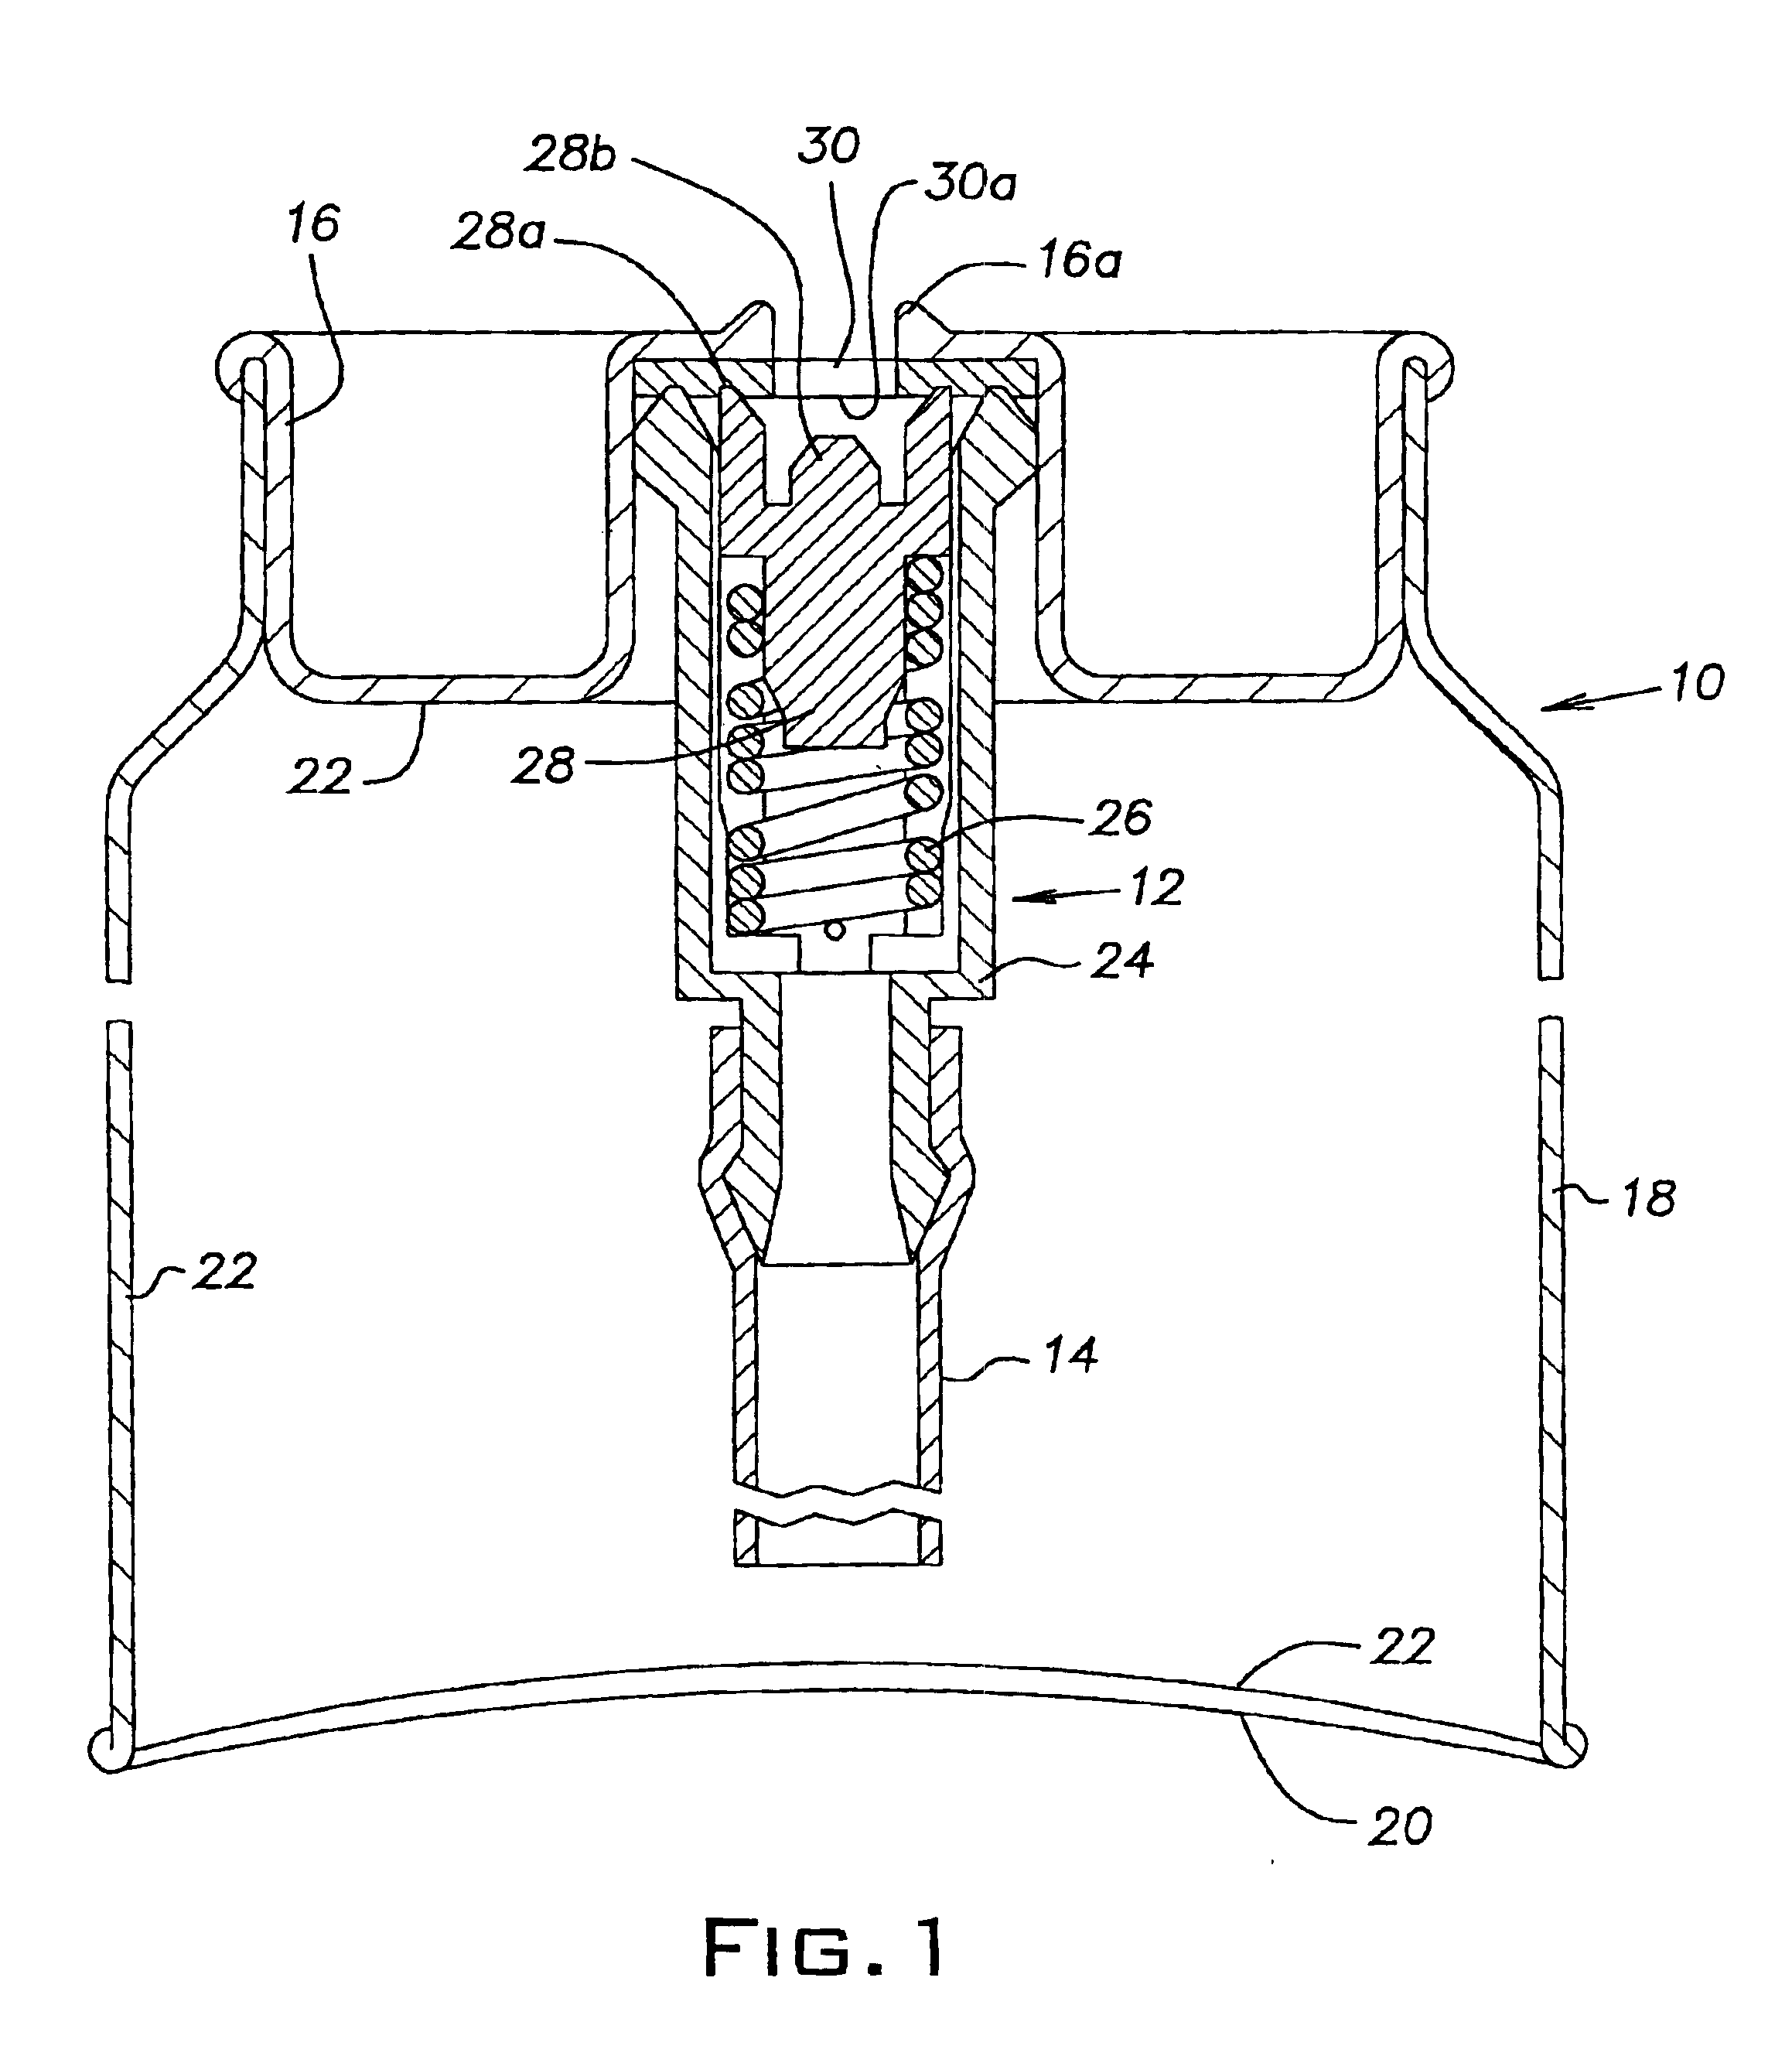 Apparatus and method for dispensing vapocoolants